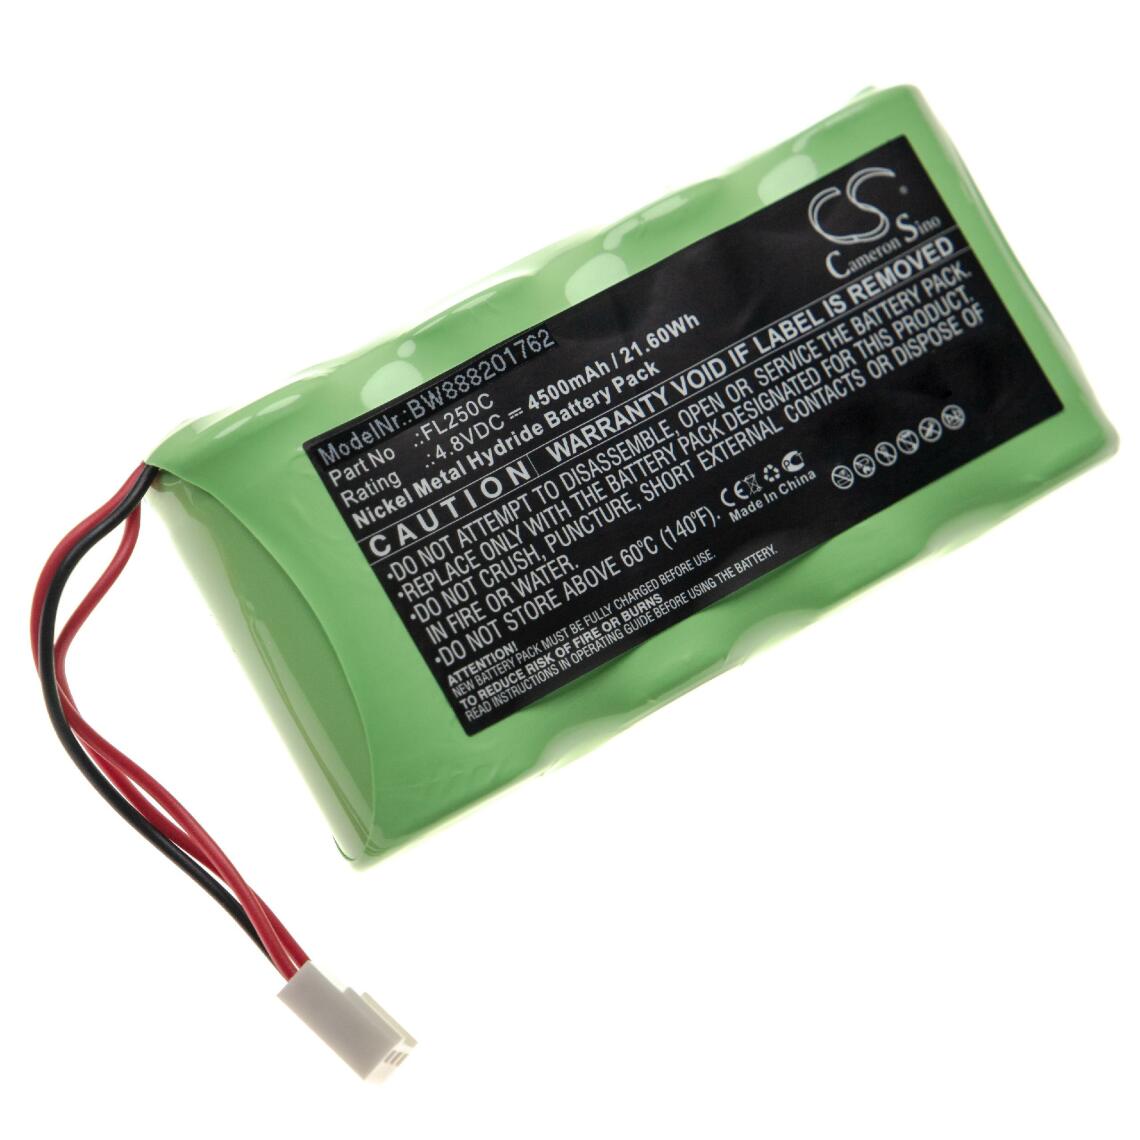 Vhbw - vhbw Batterie compatible avec Metland FL250HV, FL250VA-N, LX250 dispositif de mesure laser outil de mesure (4500mAh 4,8V NiMH) - Piles rechargeables